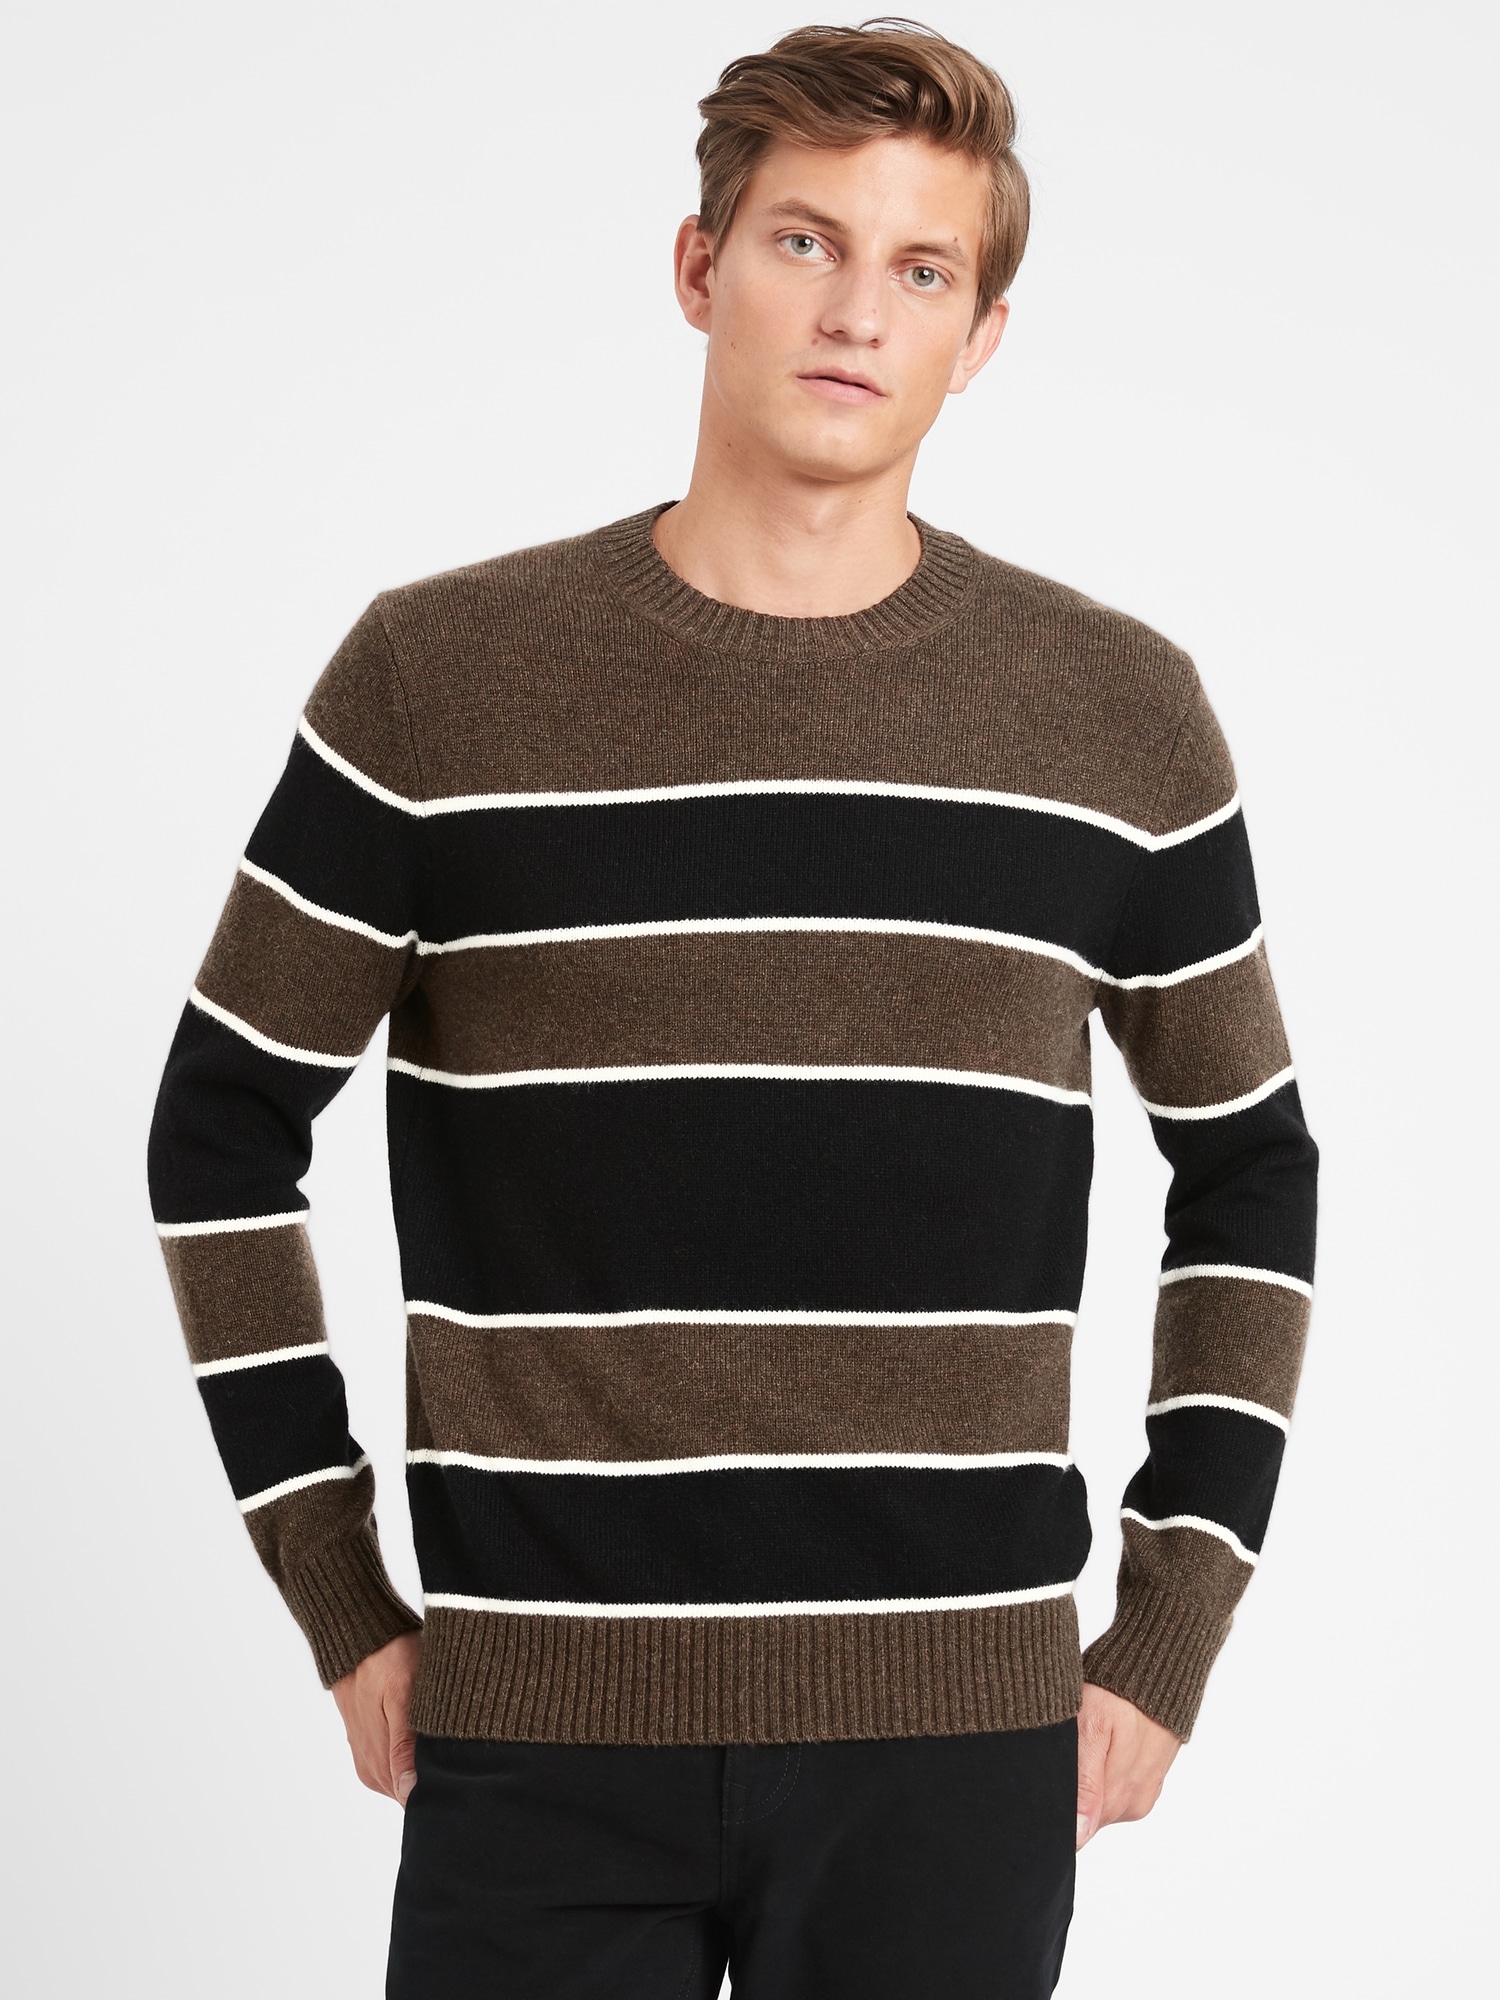 Rugby Stripe Sweater